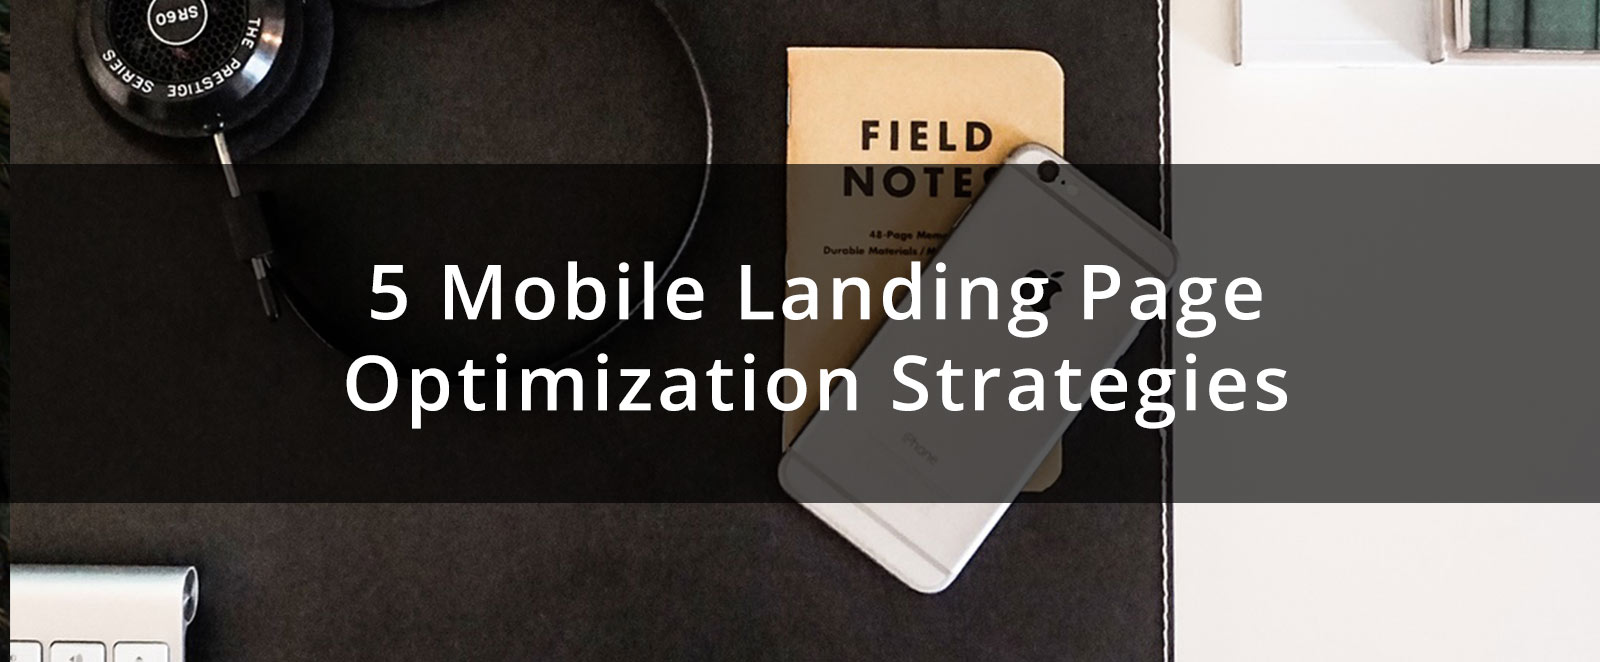 5 Mobile Landing Page Optimization Strategies